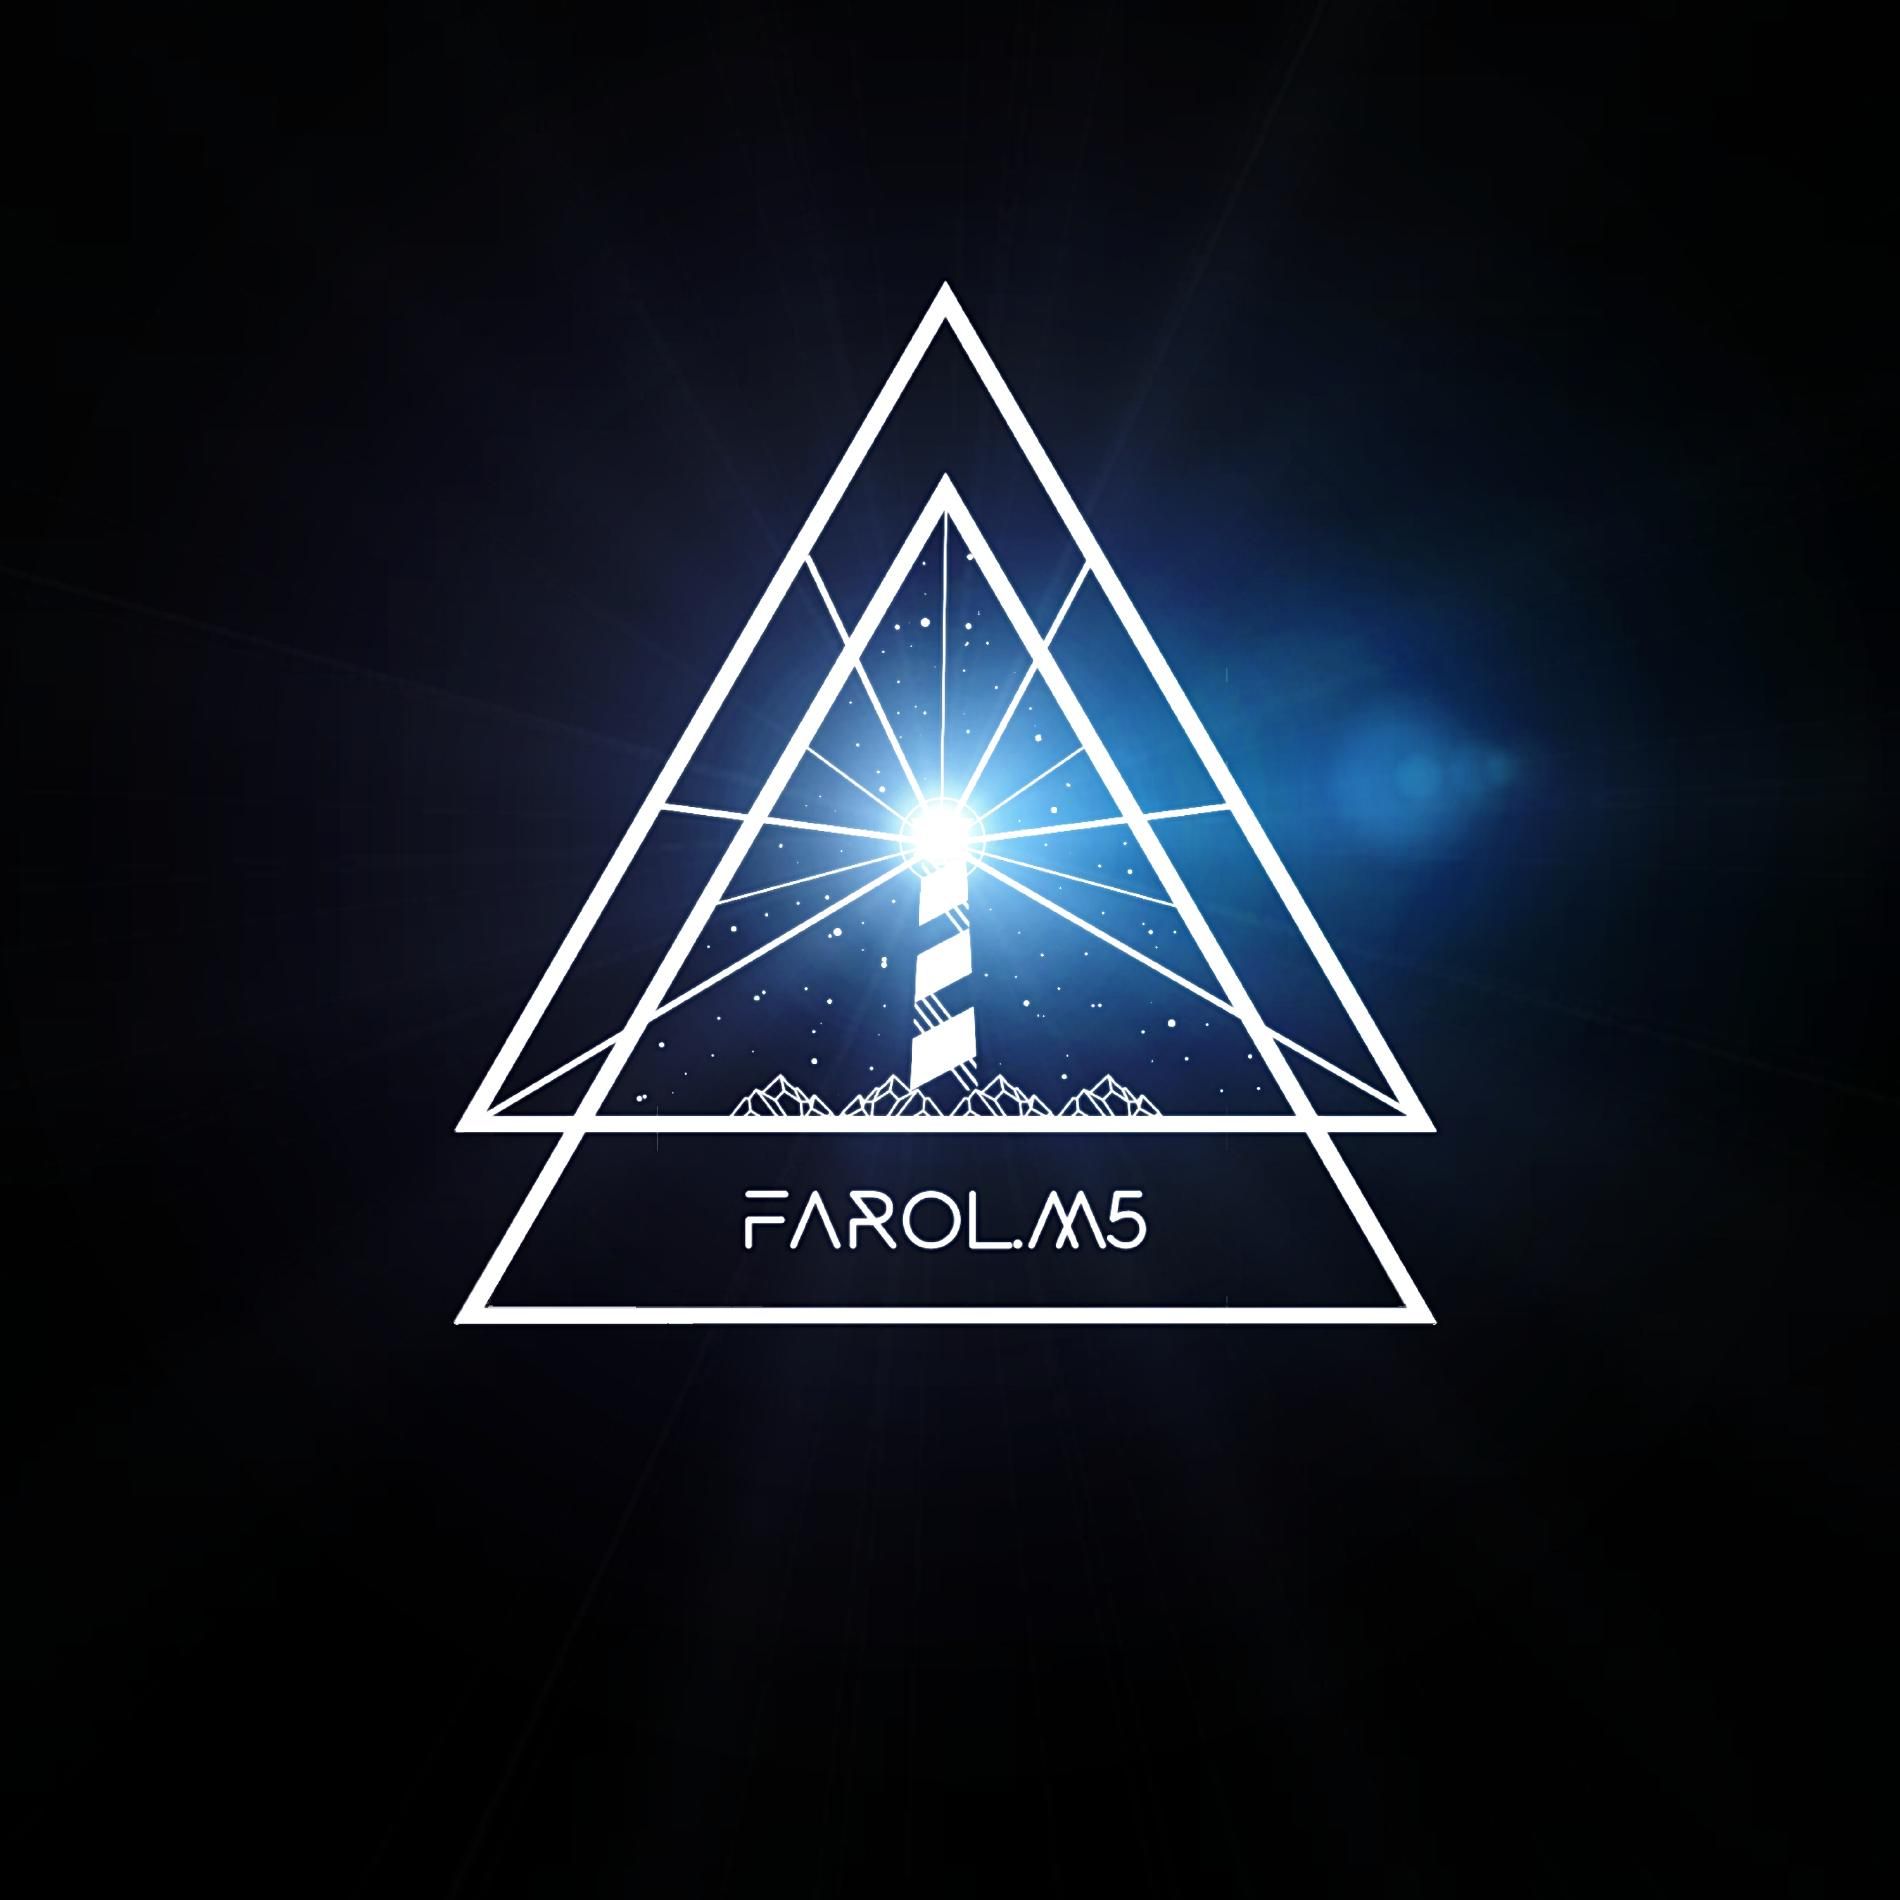 Farol M5